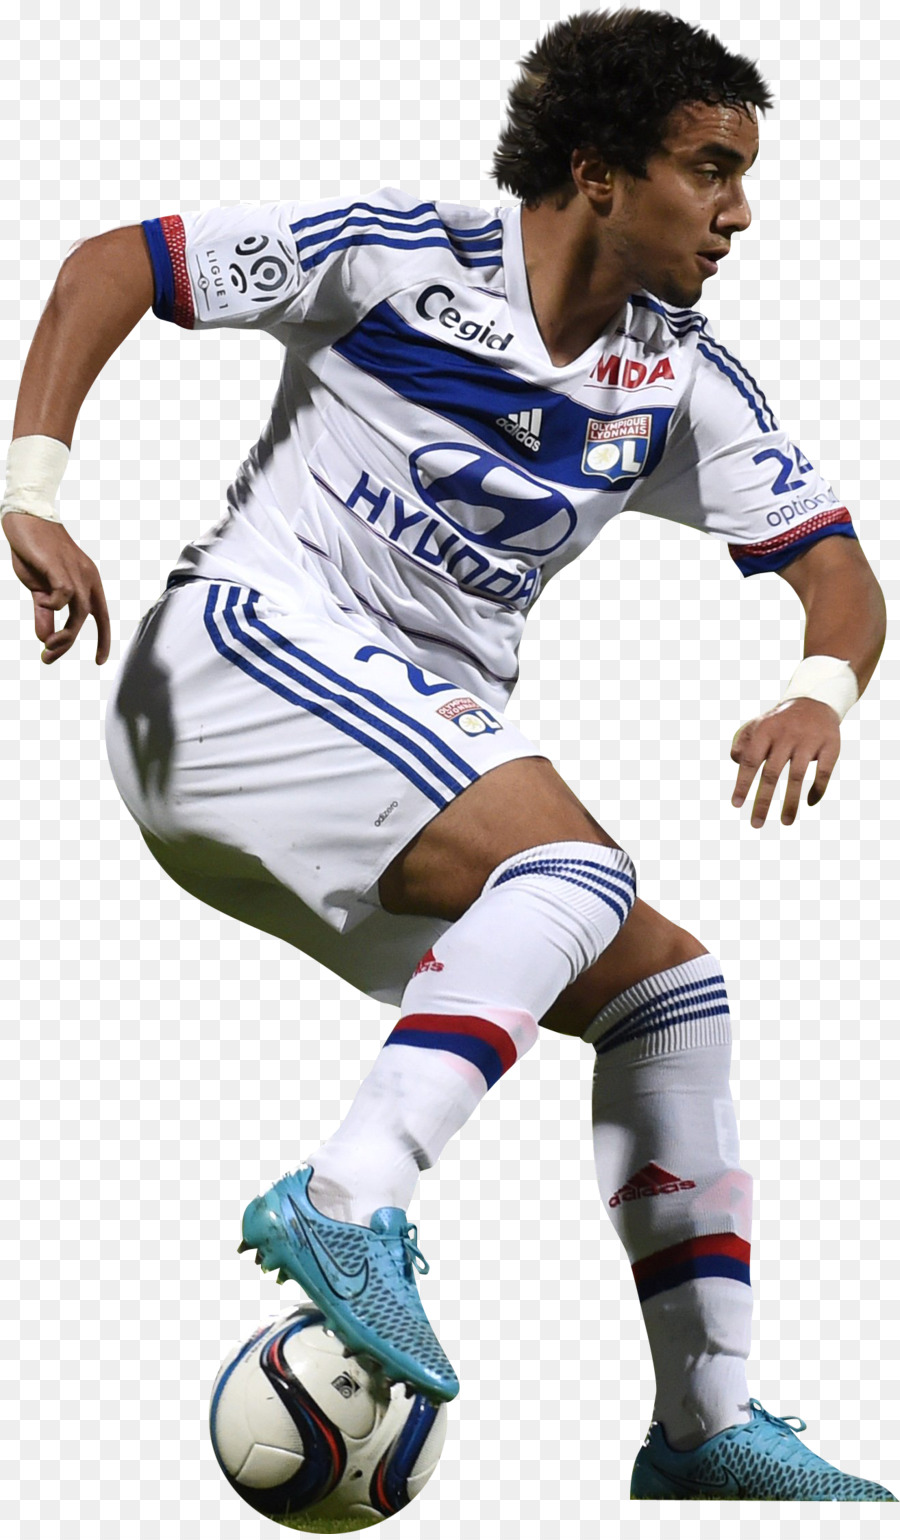 Besiktas J. K. squadra di calcio, lo sport, l'Olympique Lyonnais calciatori di una Squadra di Rafael - casemiro brasile